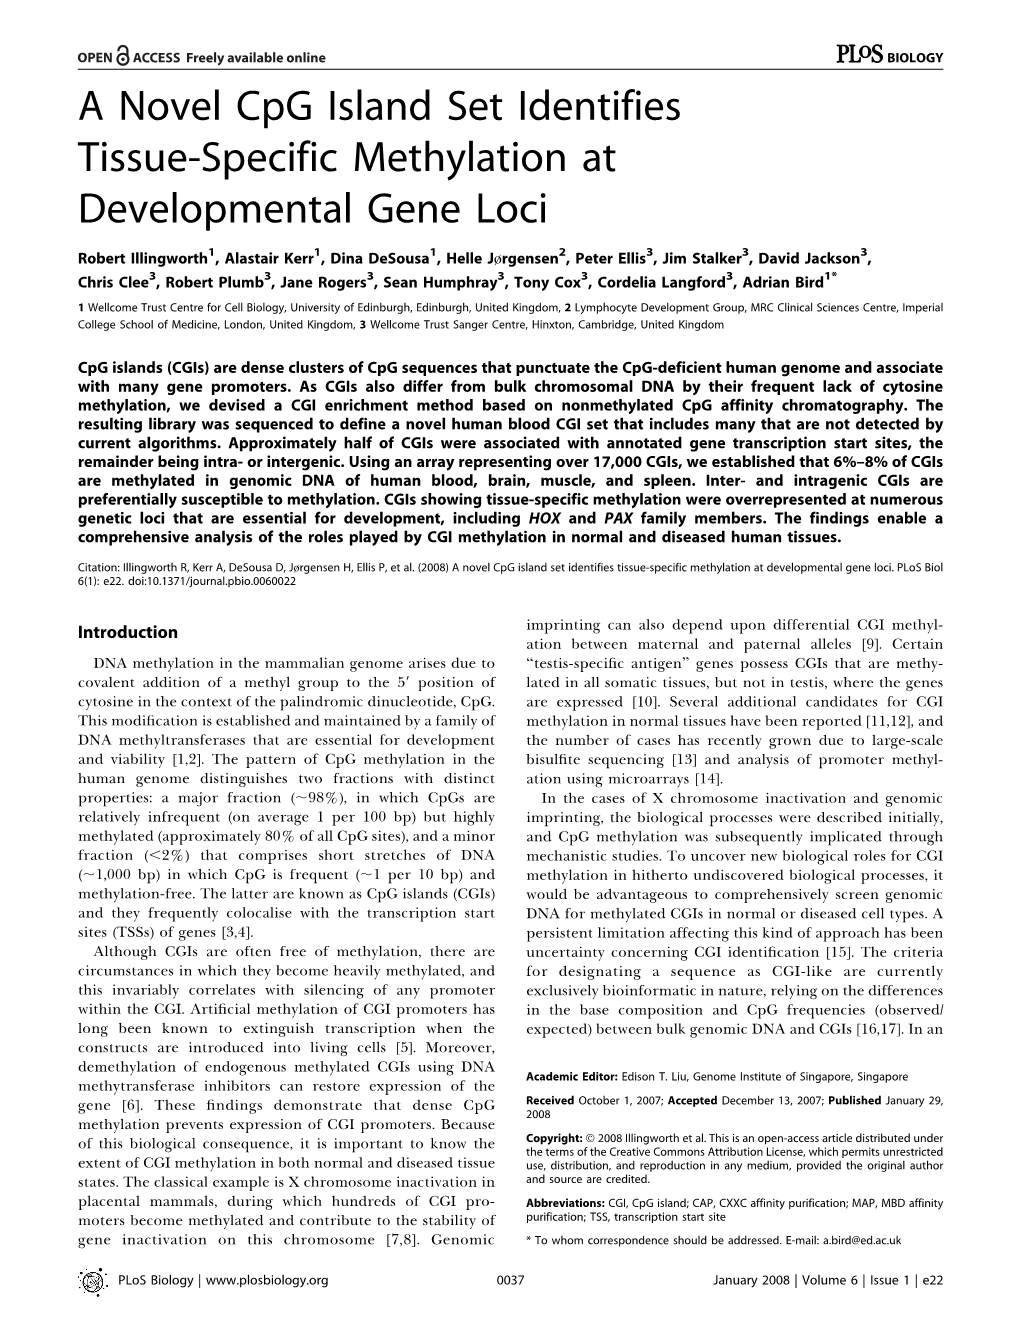 A Novel Cpg Island Set Identifies Tissue-Specific Methylation at Developmental Gene Loci